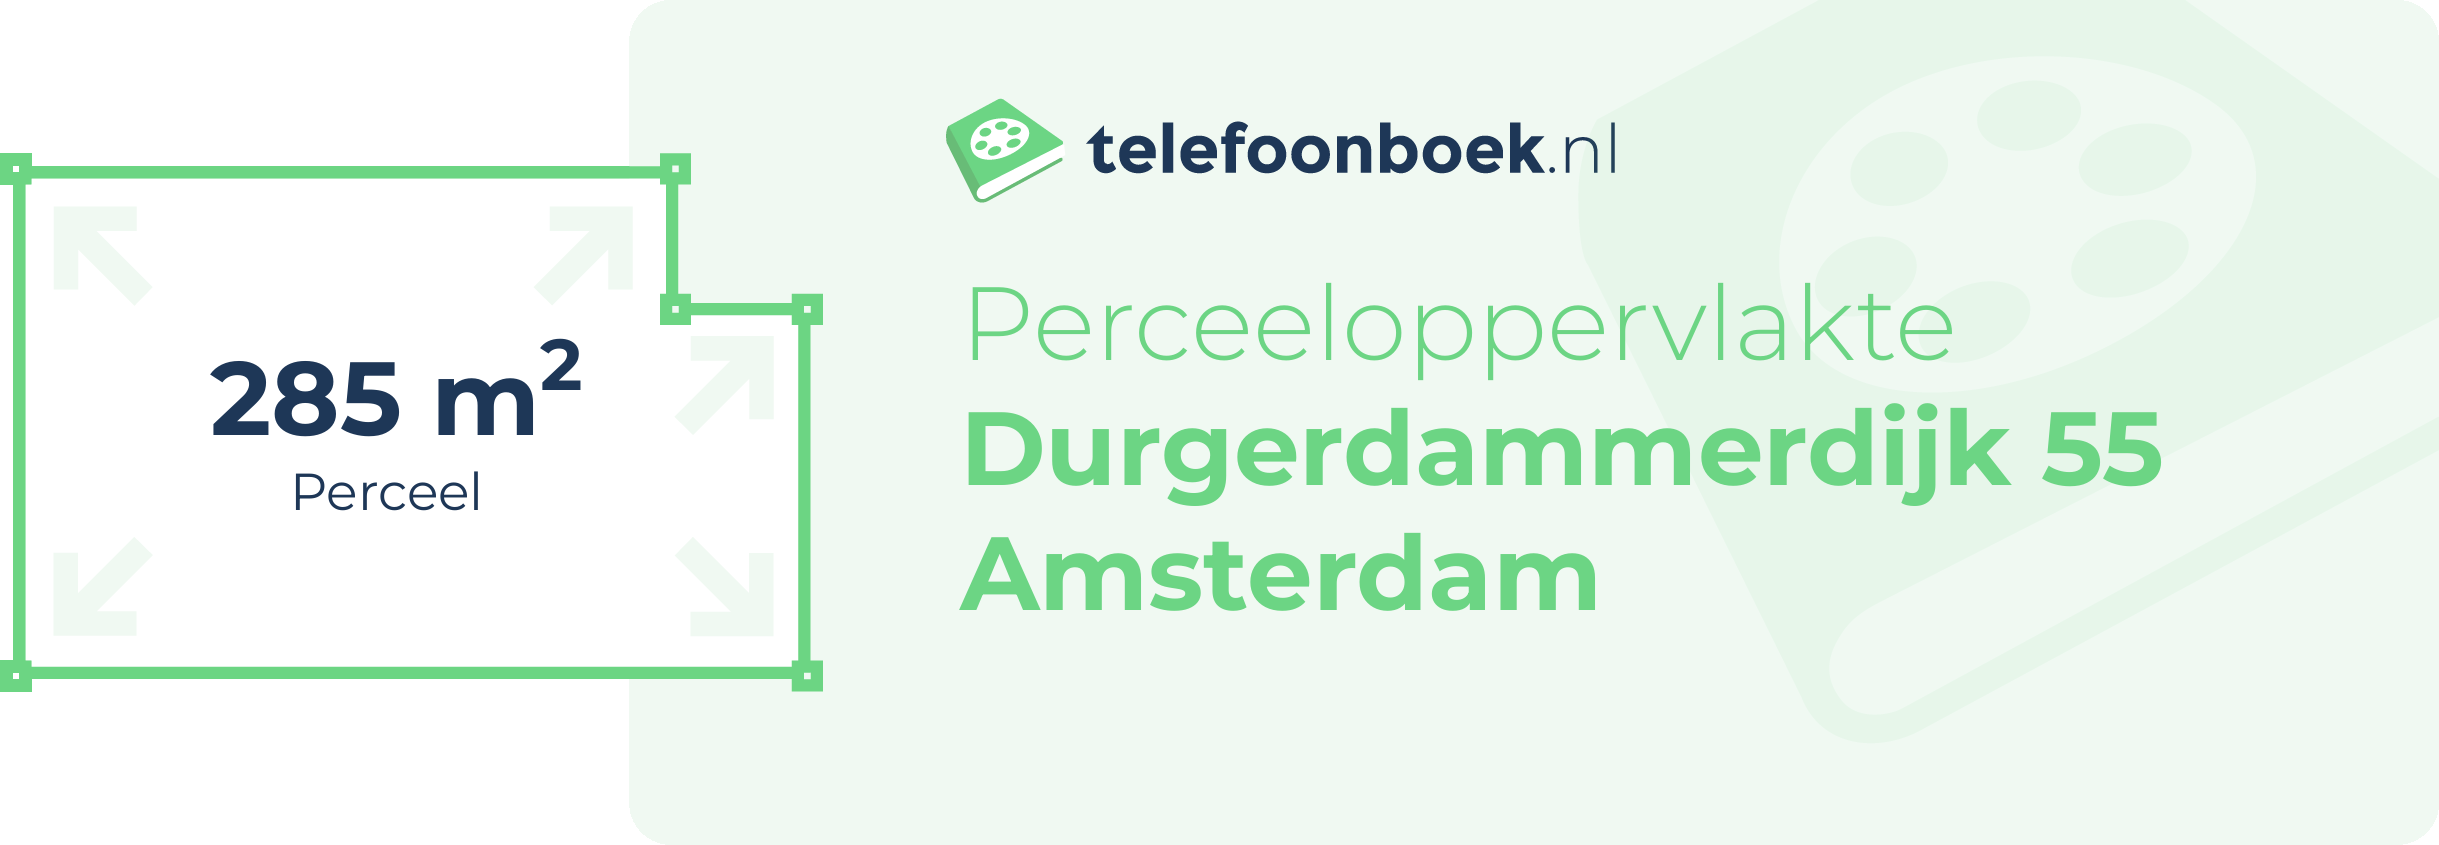 Perceeloppervlakte Durgerdammerdijk 55 Amsterdam